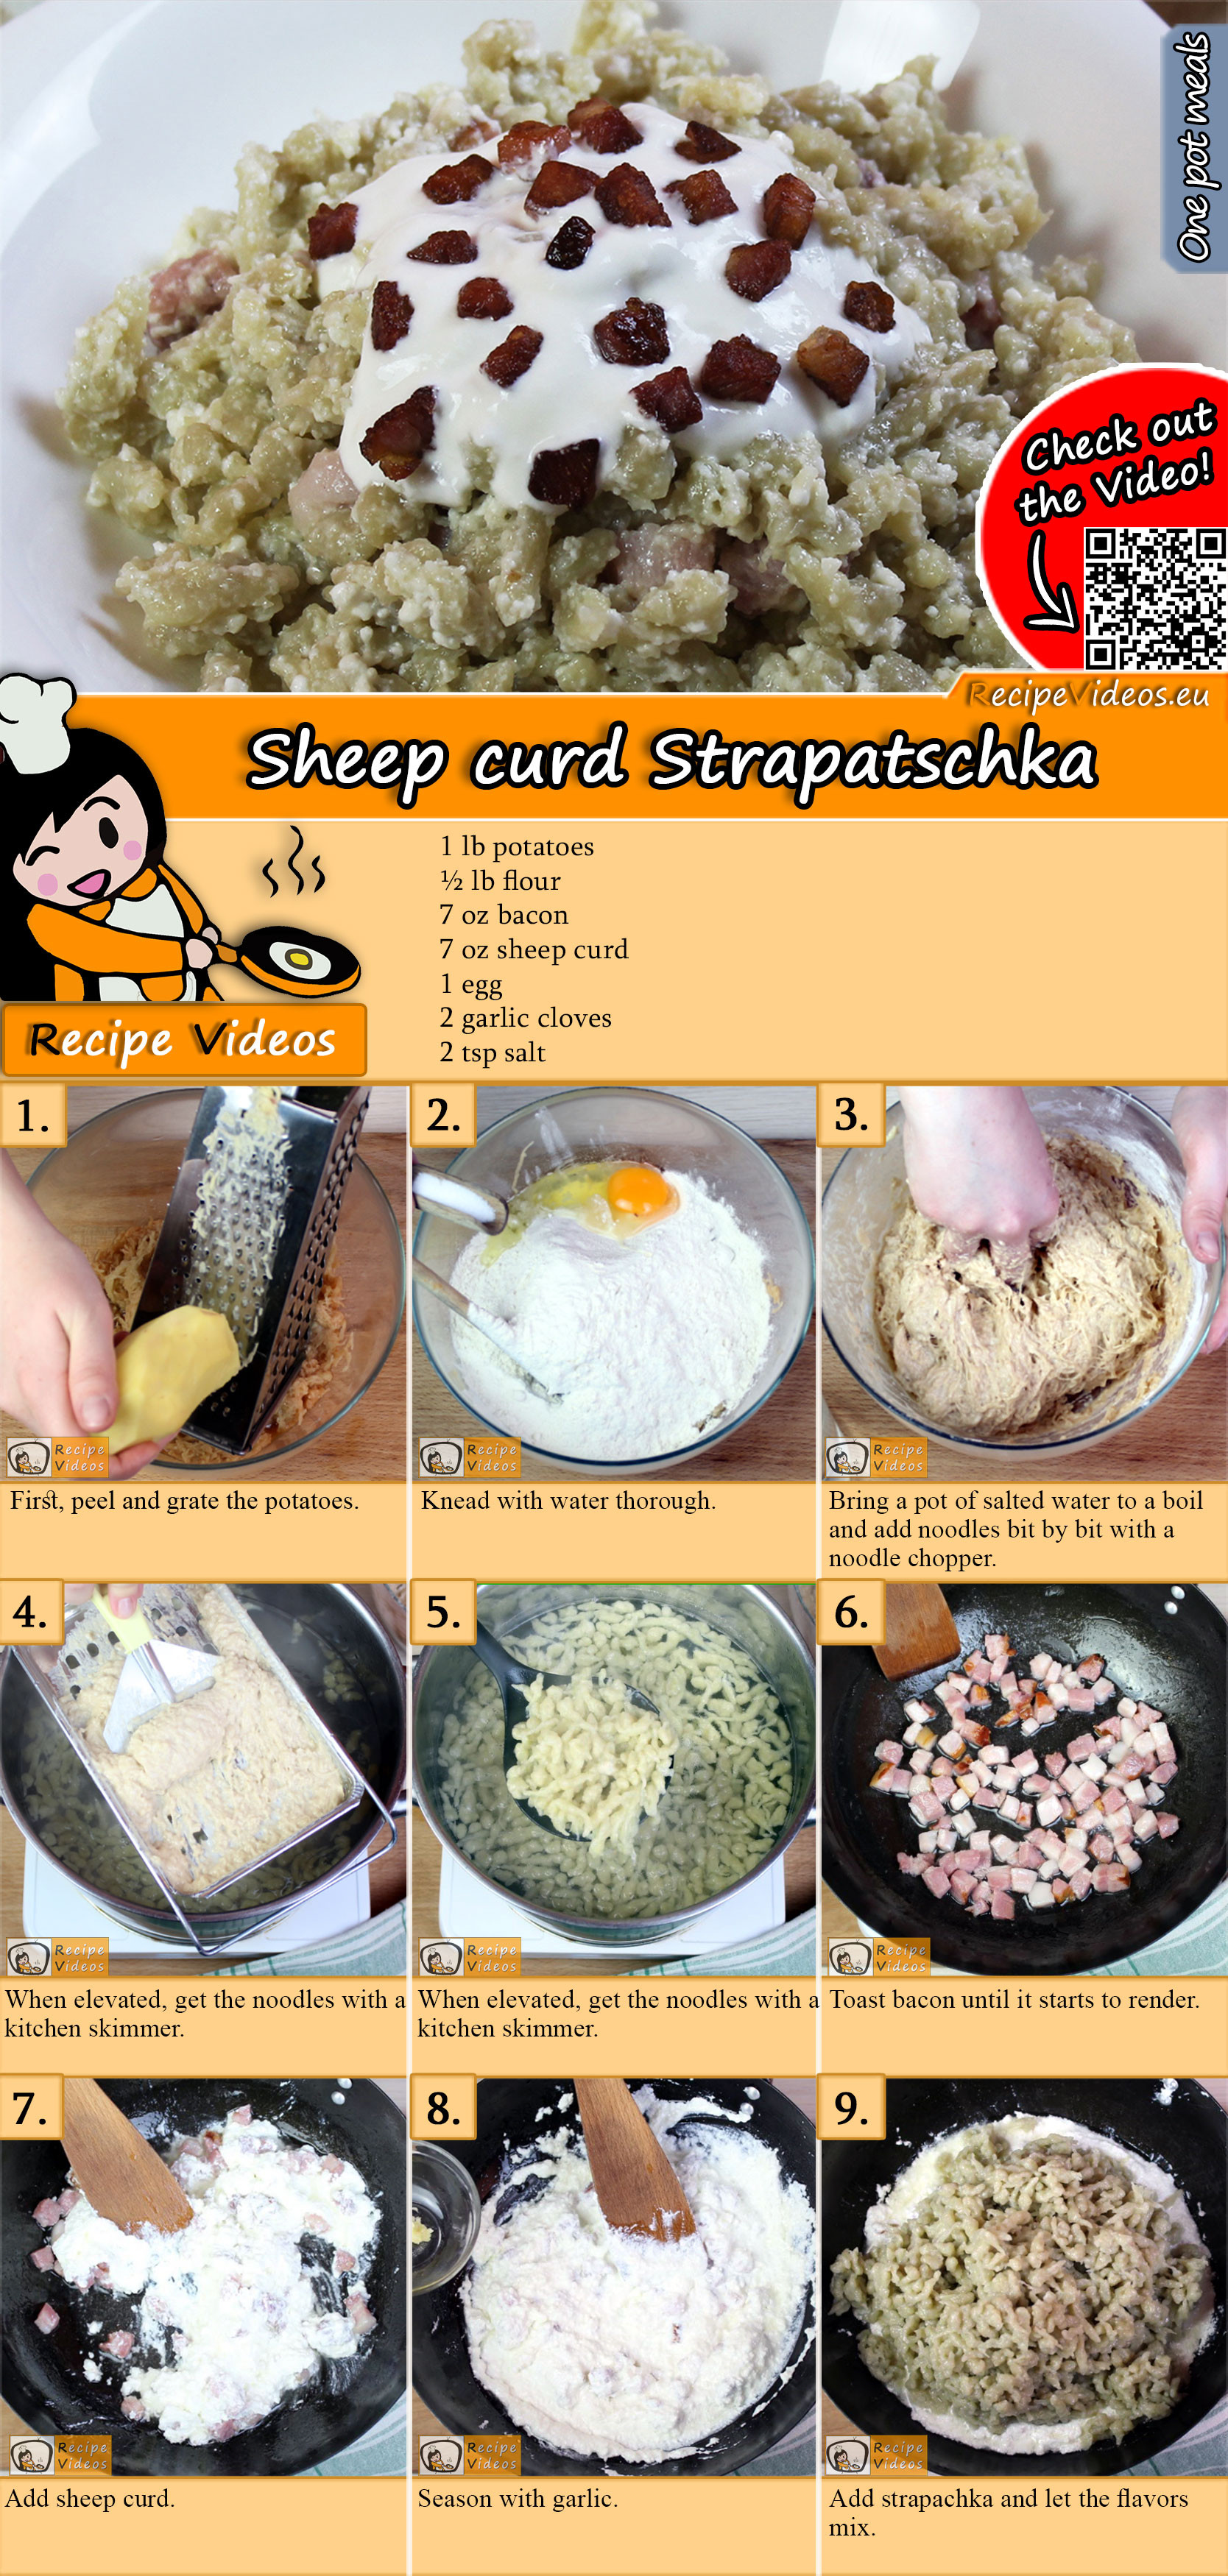 Sheep curd Strapatschka recipe with video